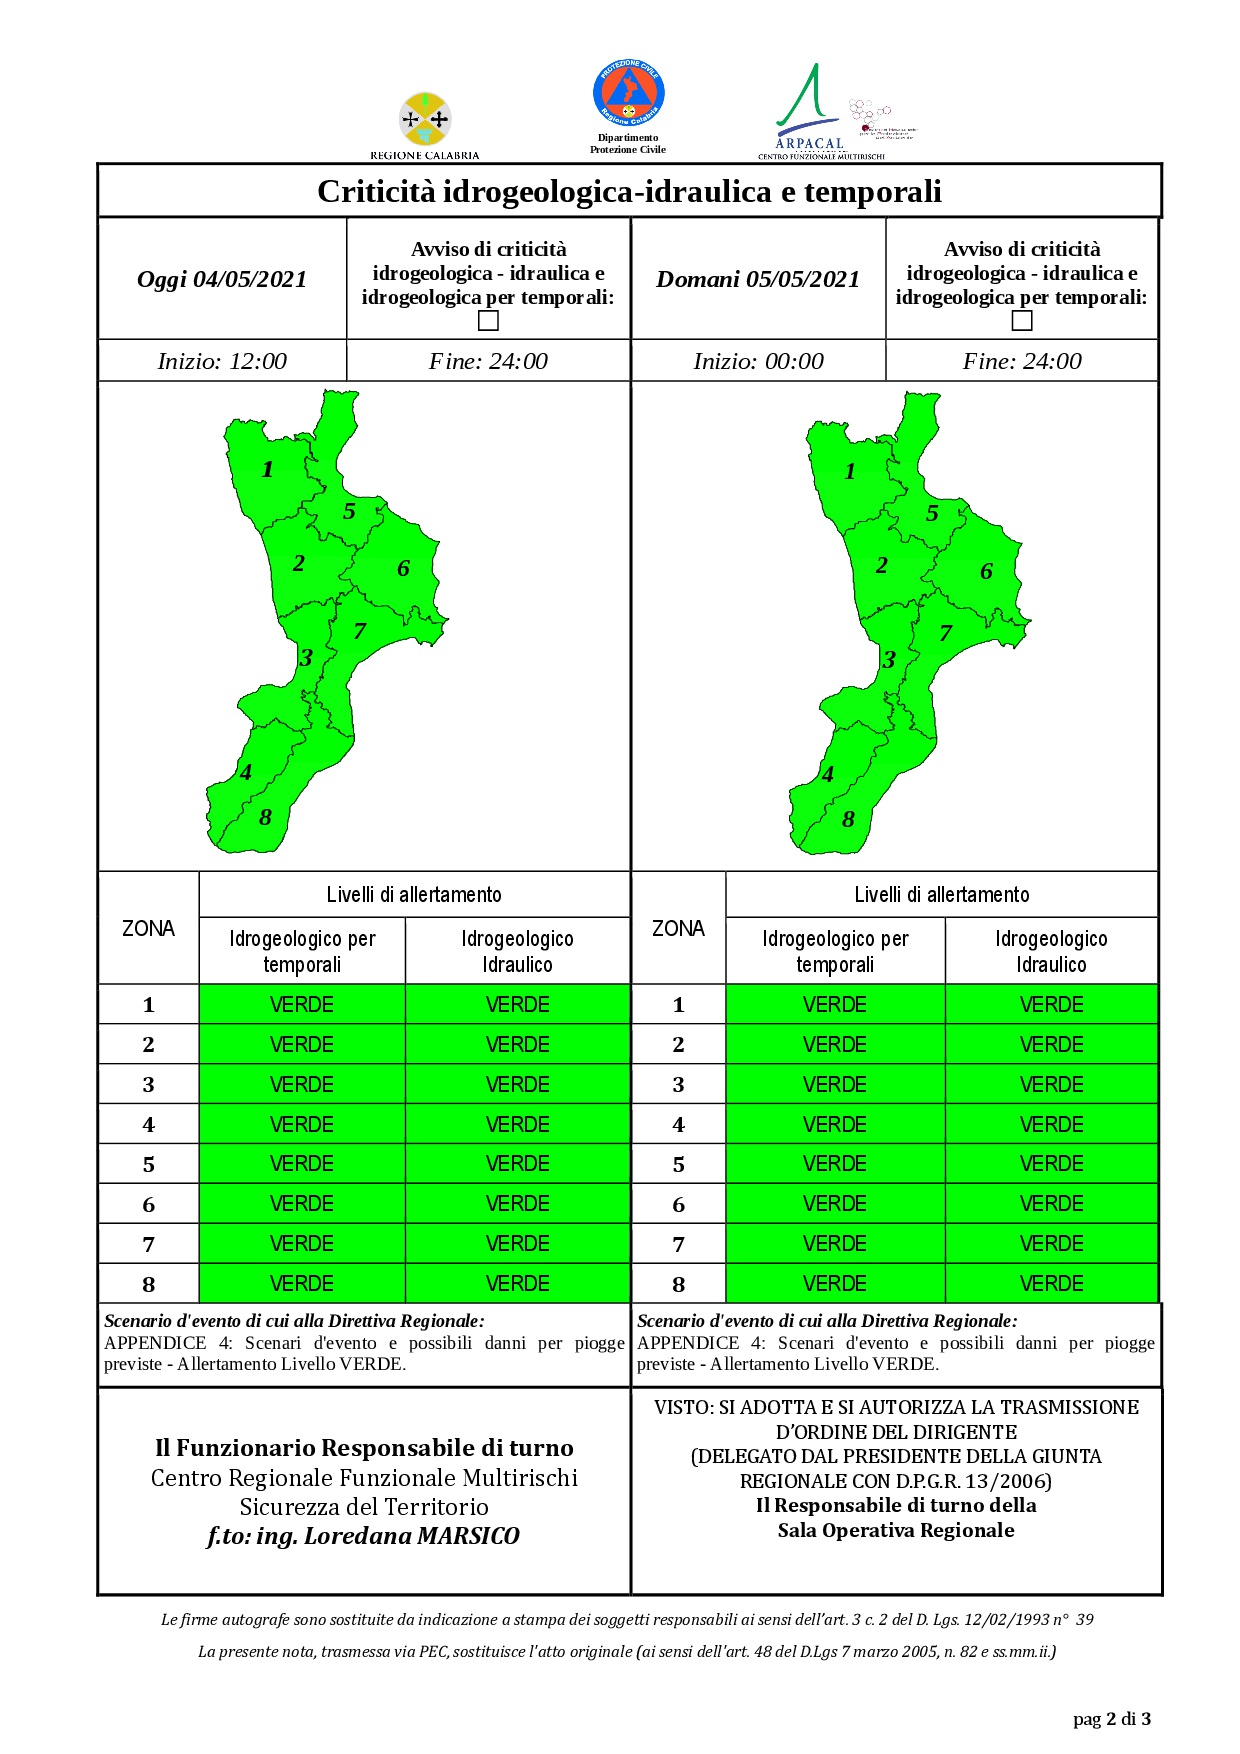 Criticità idrogeologica-idraulica e temporali in Calabria 04-05-2021